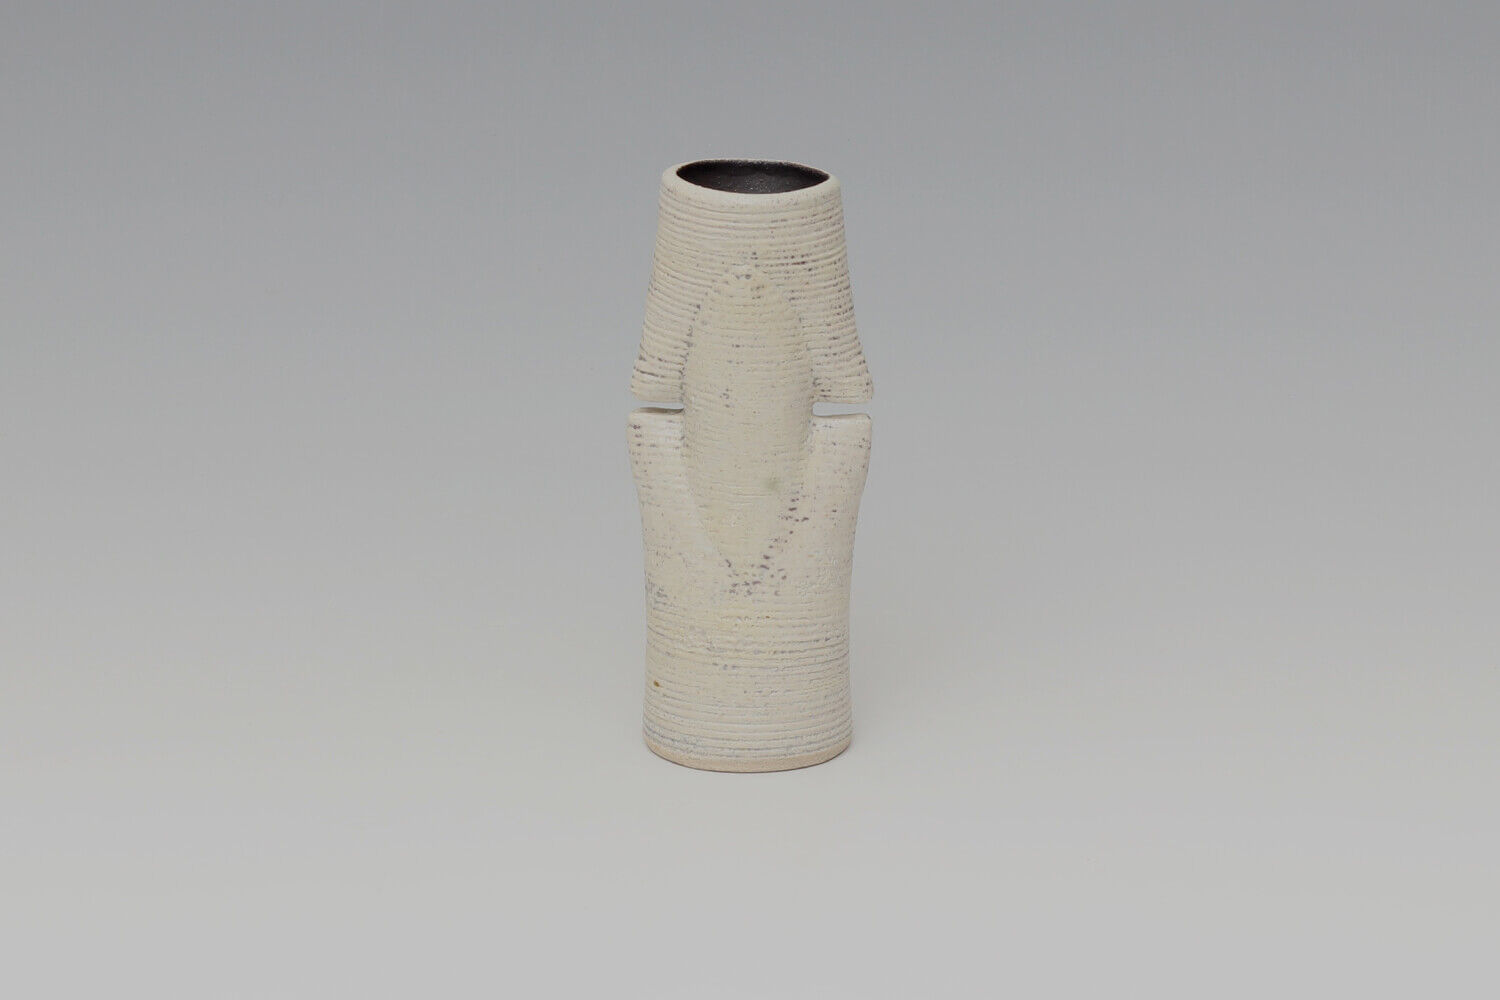 Chris Carter Ceramic Double Totemic Form 151